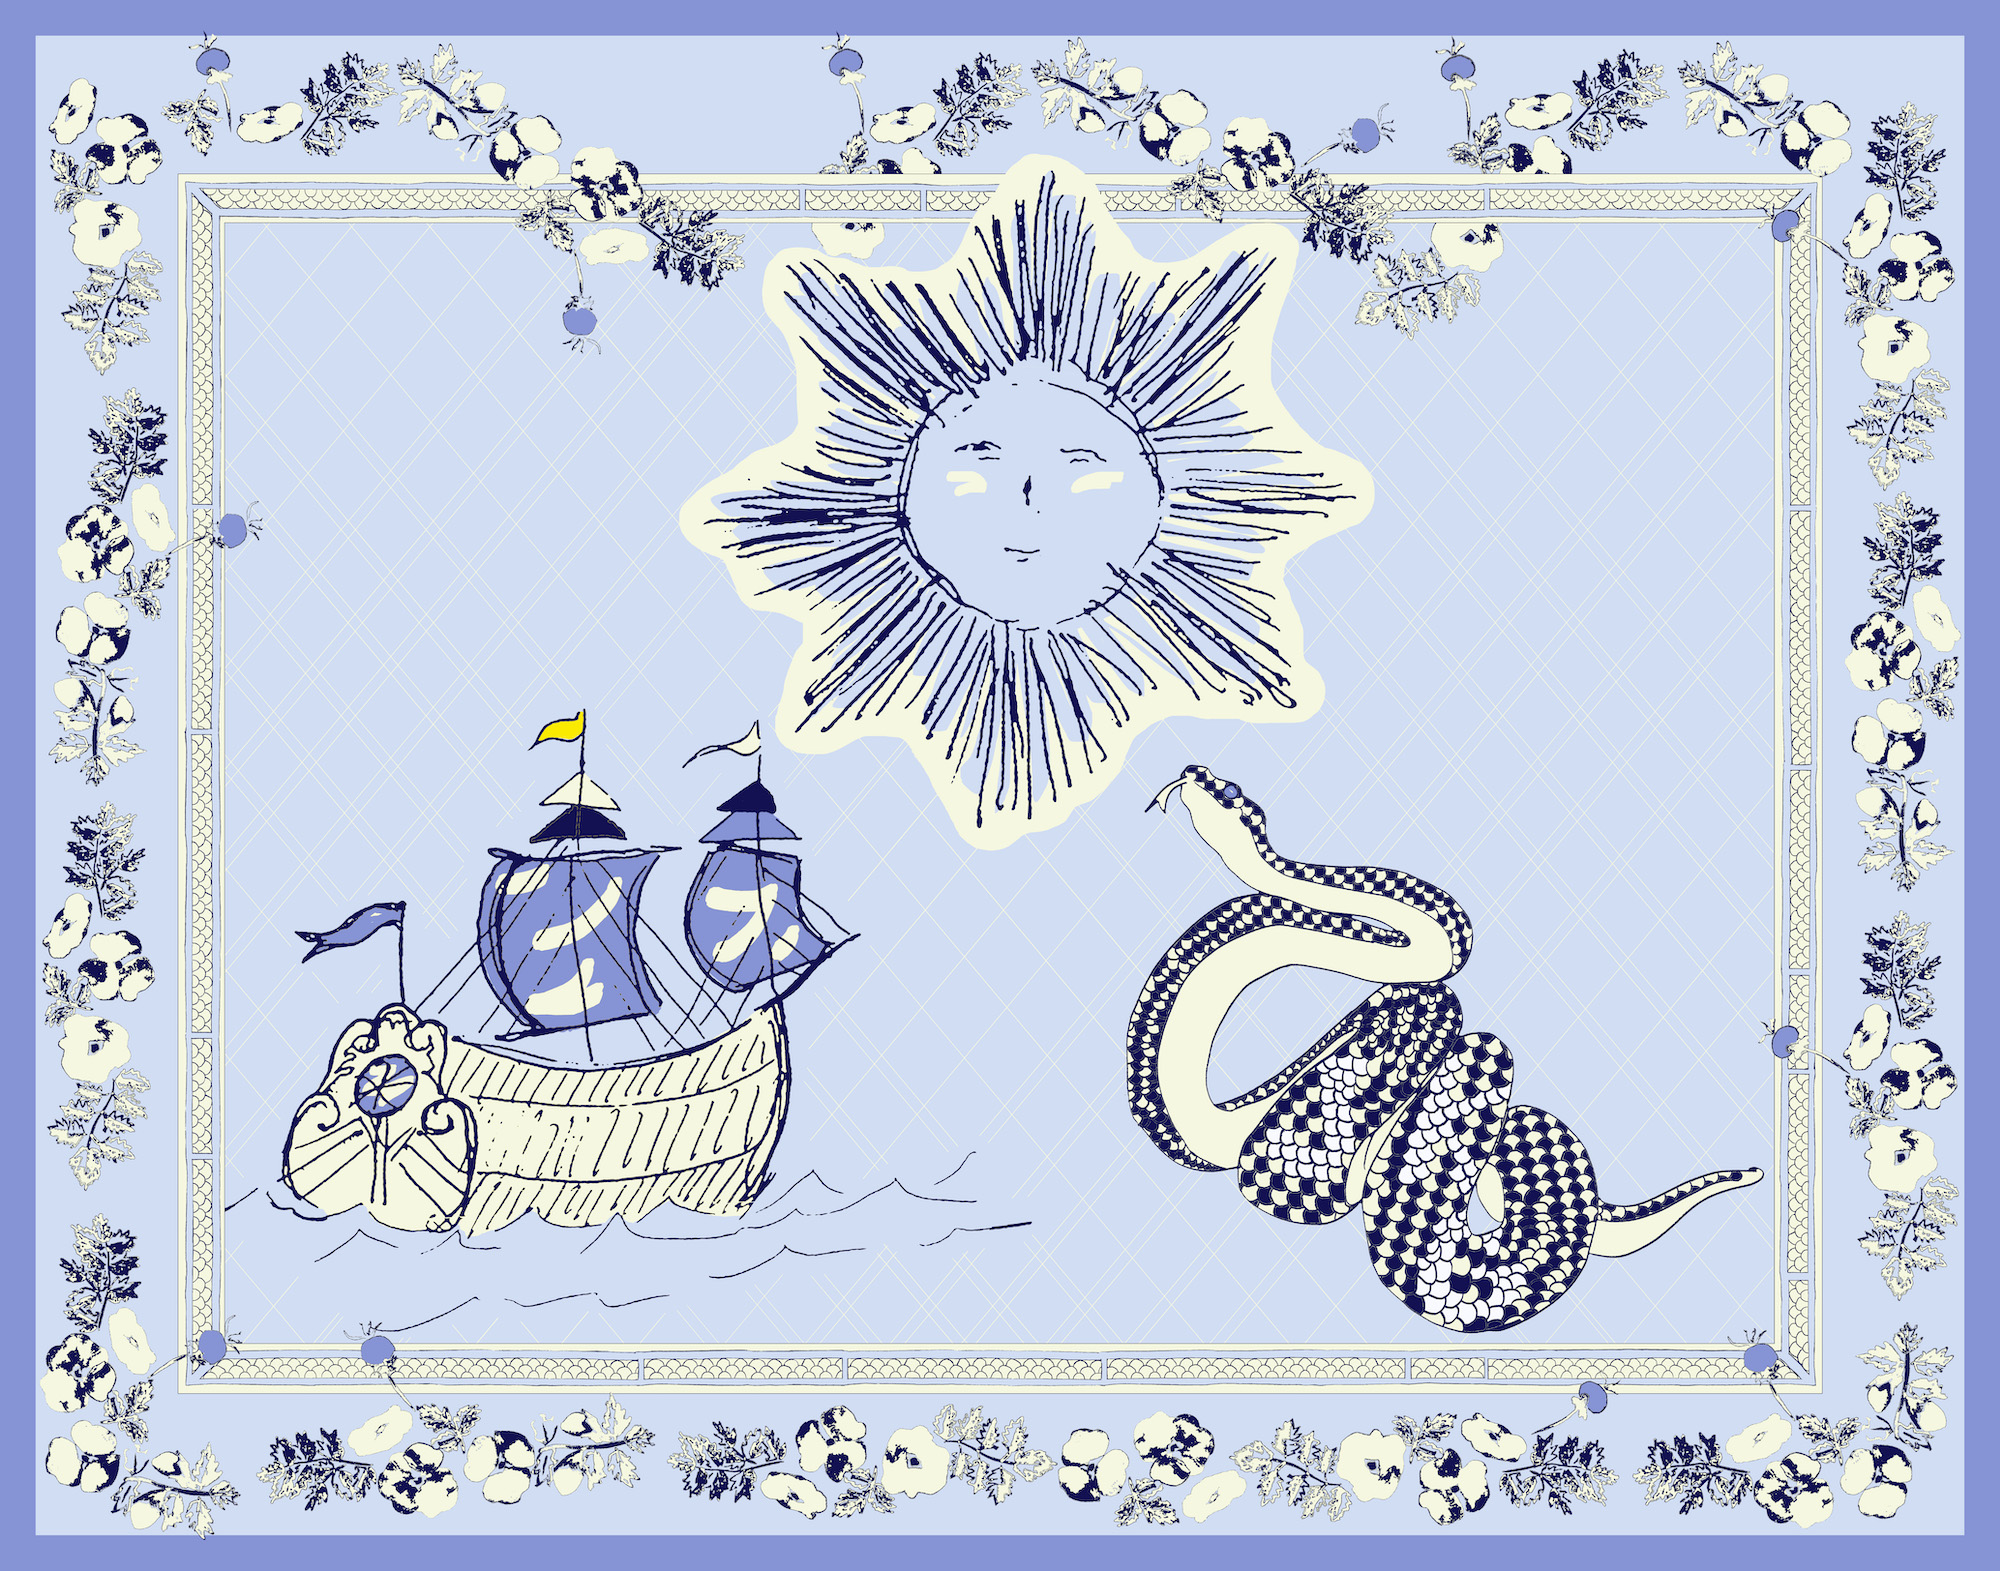 Ship, sun, and snake illustration atop a pale lavender violet field.